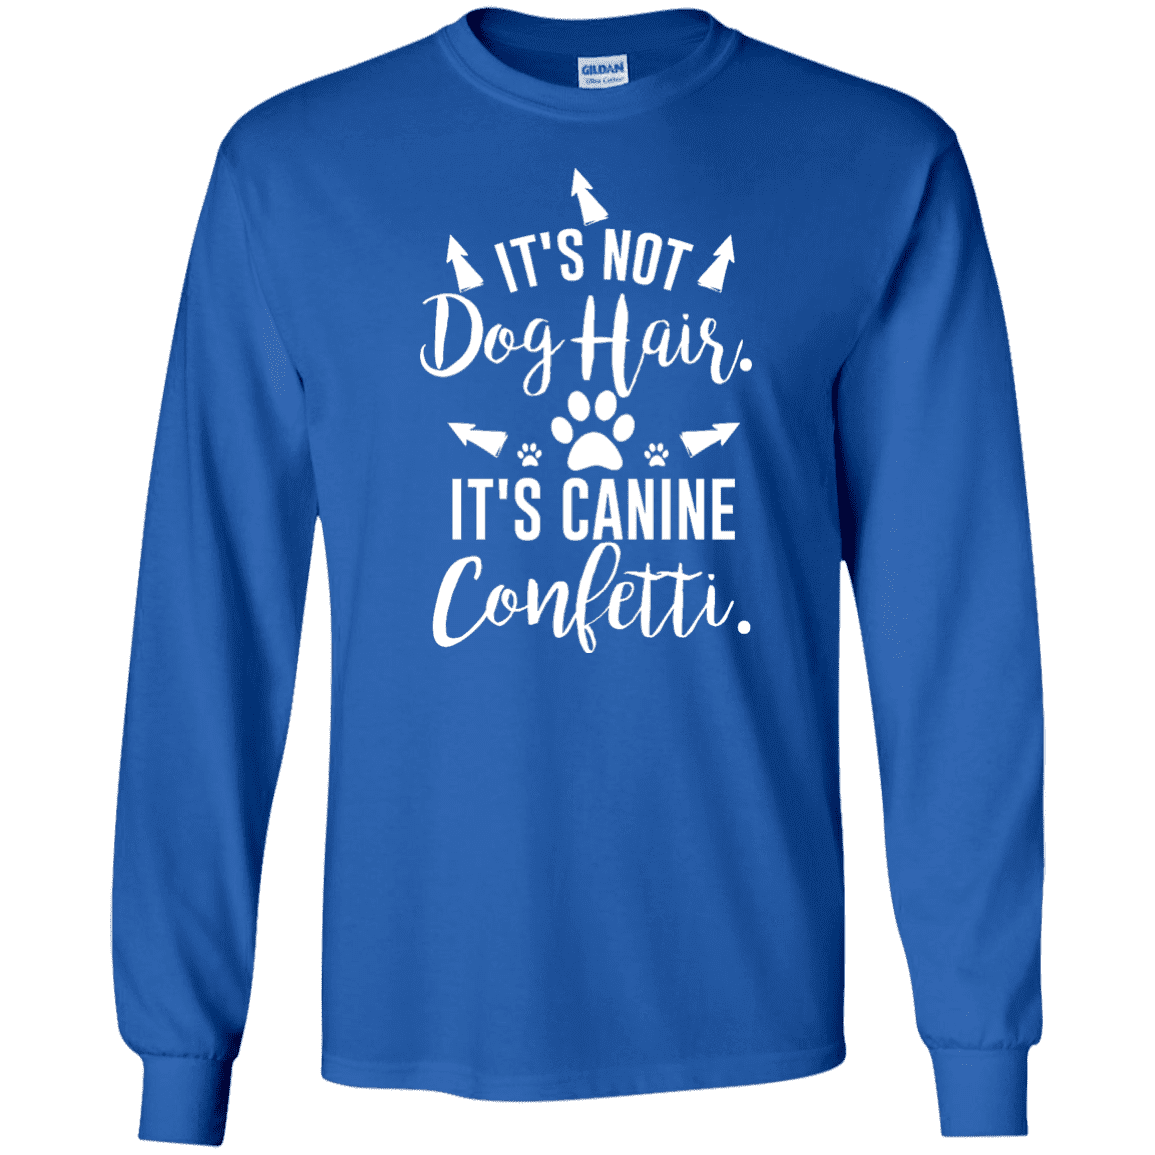 Canine Confetti - Long Sleeve T Shirt.